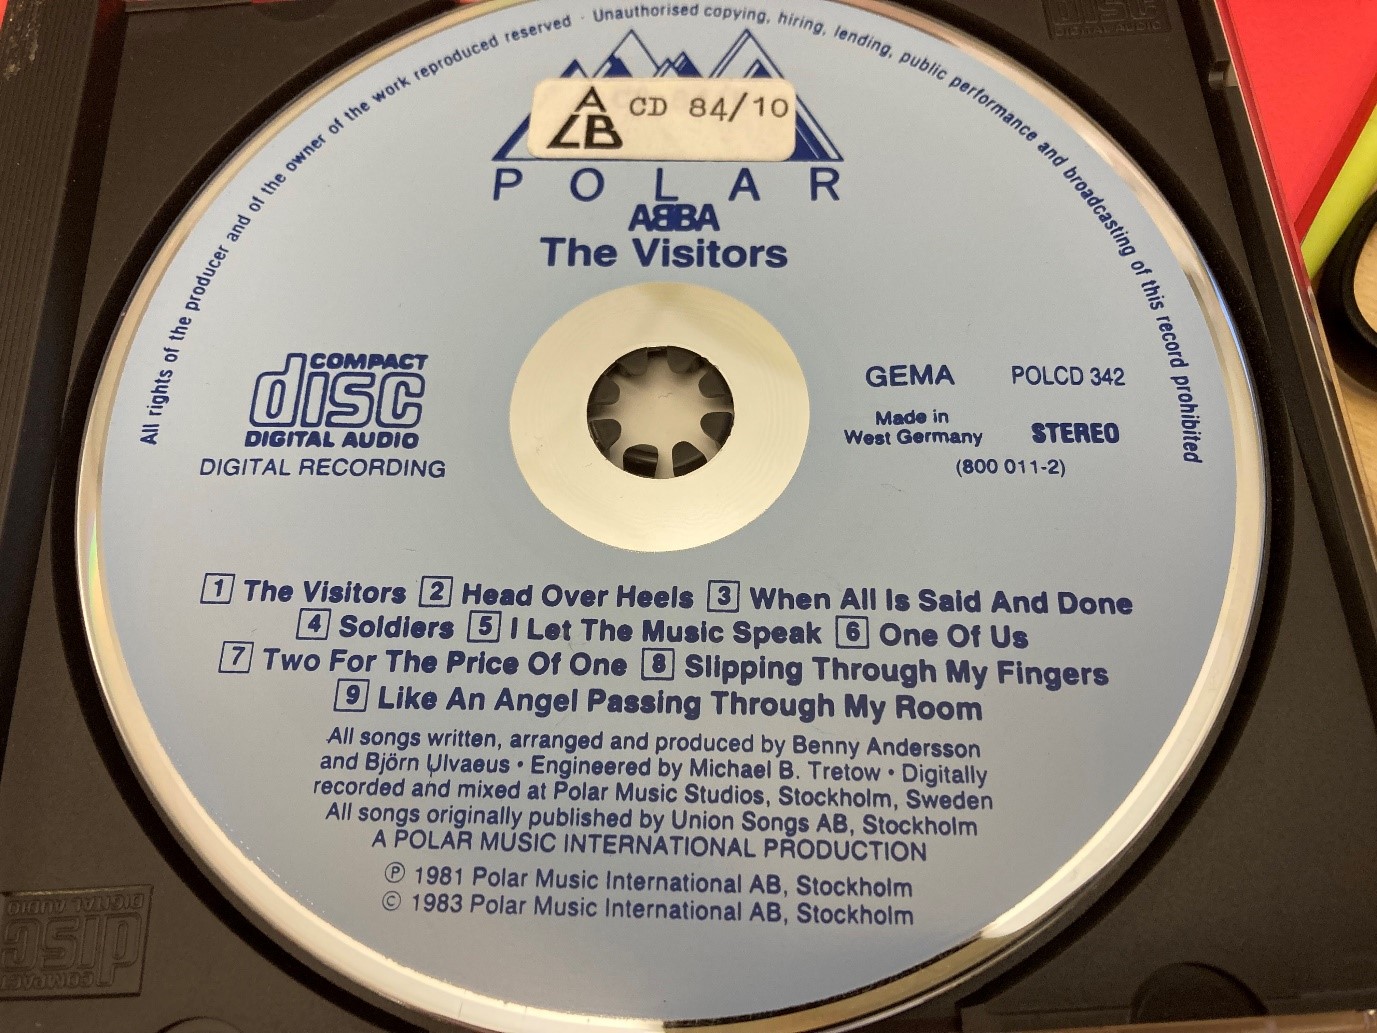 CD-skiva ABBA The visitors med etikett med arkivnummer